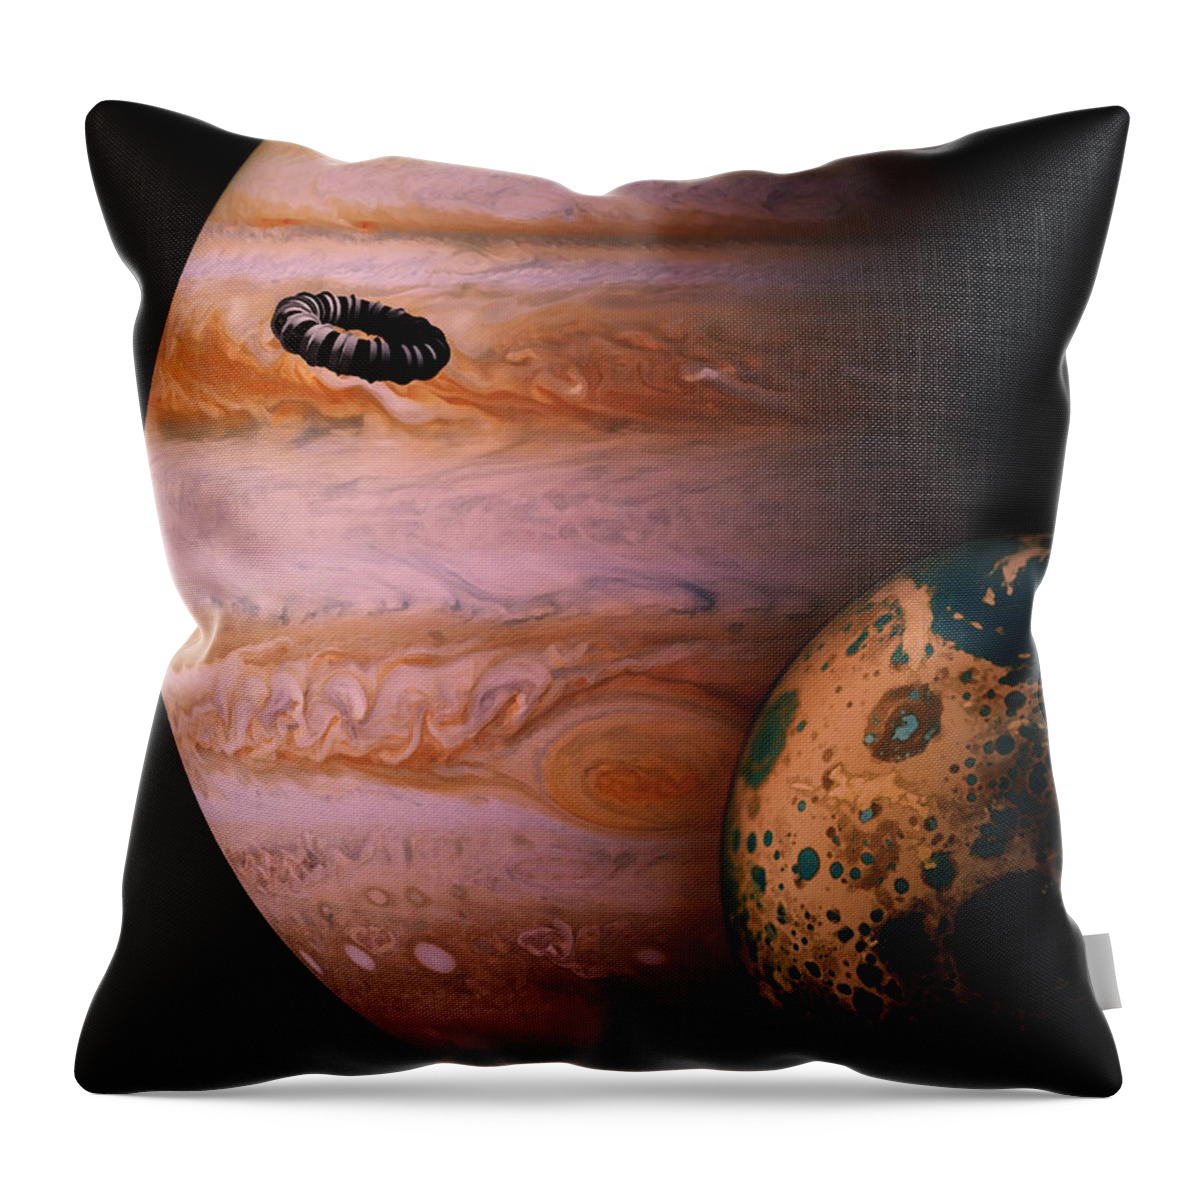 Space Throw Pillow featuring the digital art Carhayaken Project by J Carrell Jones